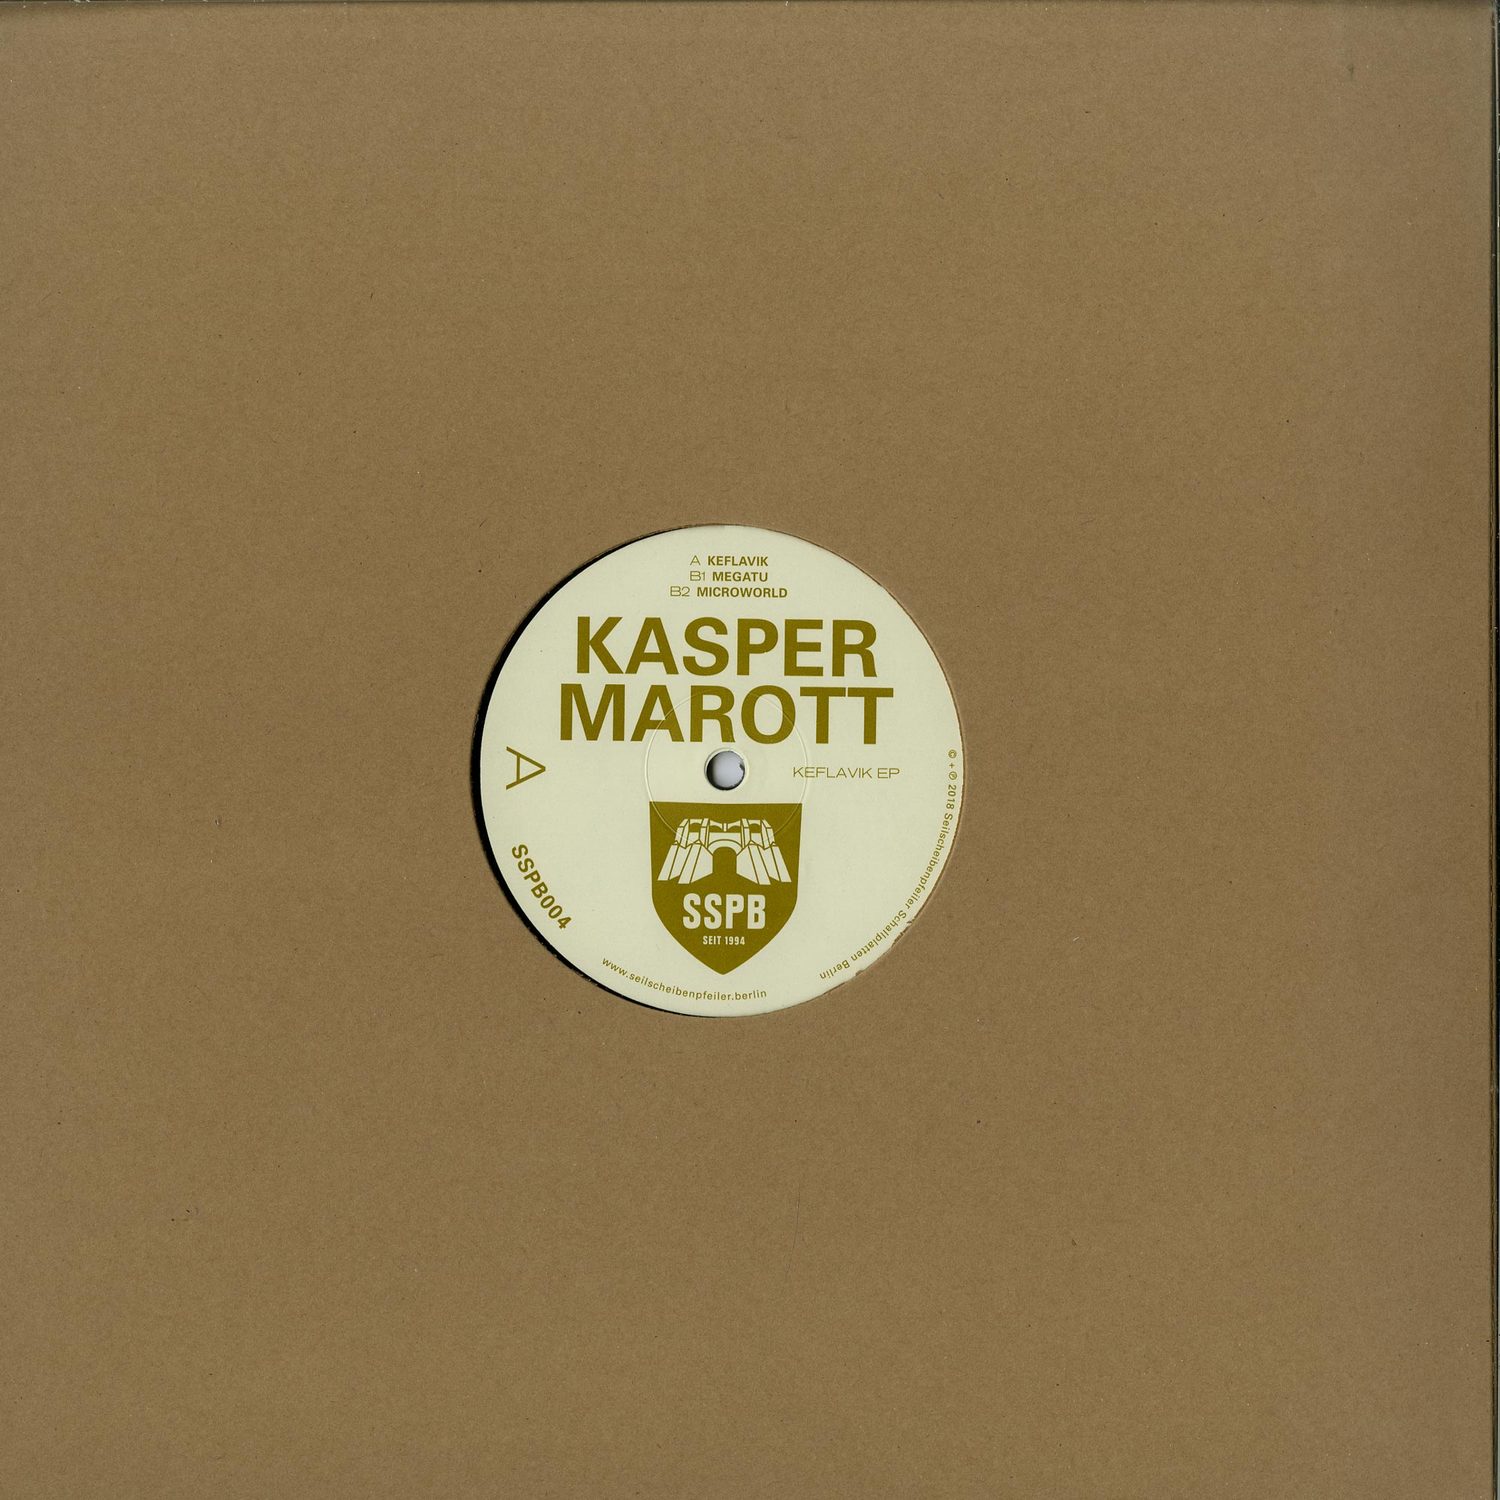 Kasper Marott - KEFLAVIK EP